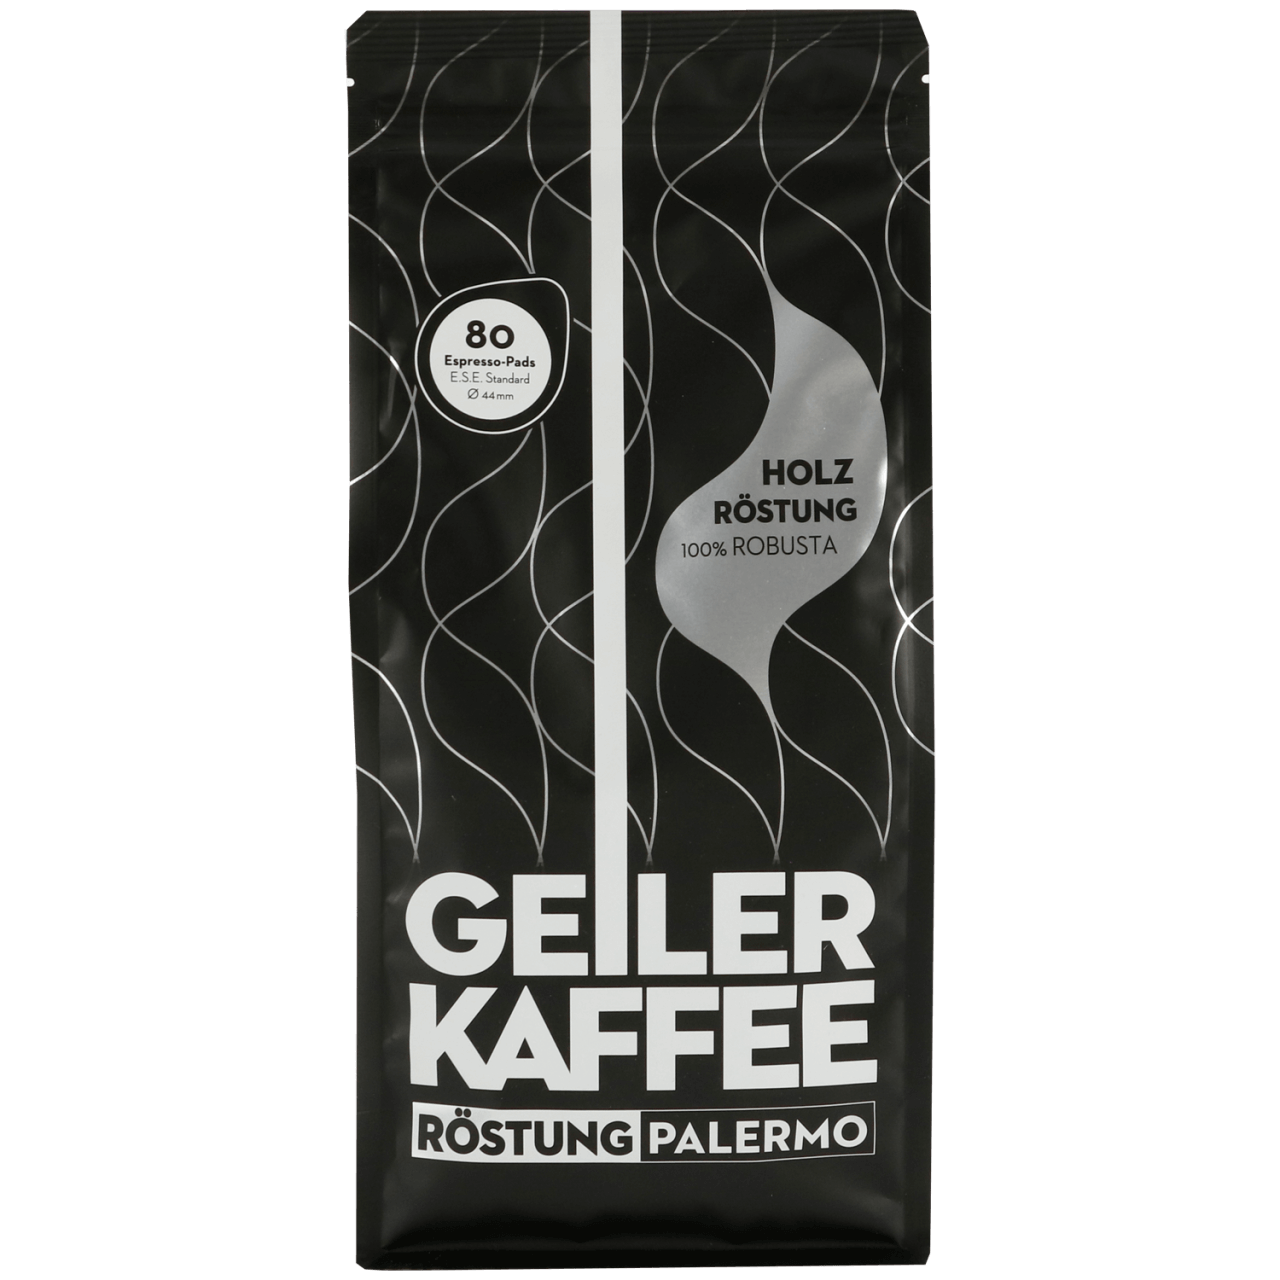 Geiler Kaffee Röstung Palermo ESE Pads ohne Alu-Umverpackung 80 Stück